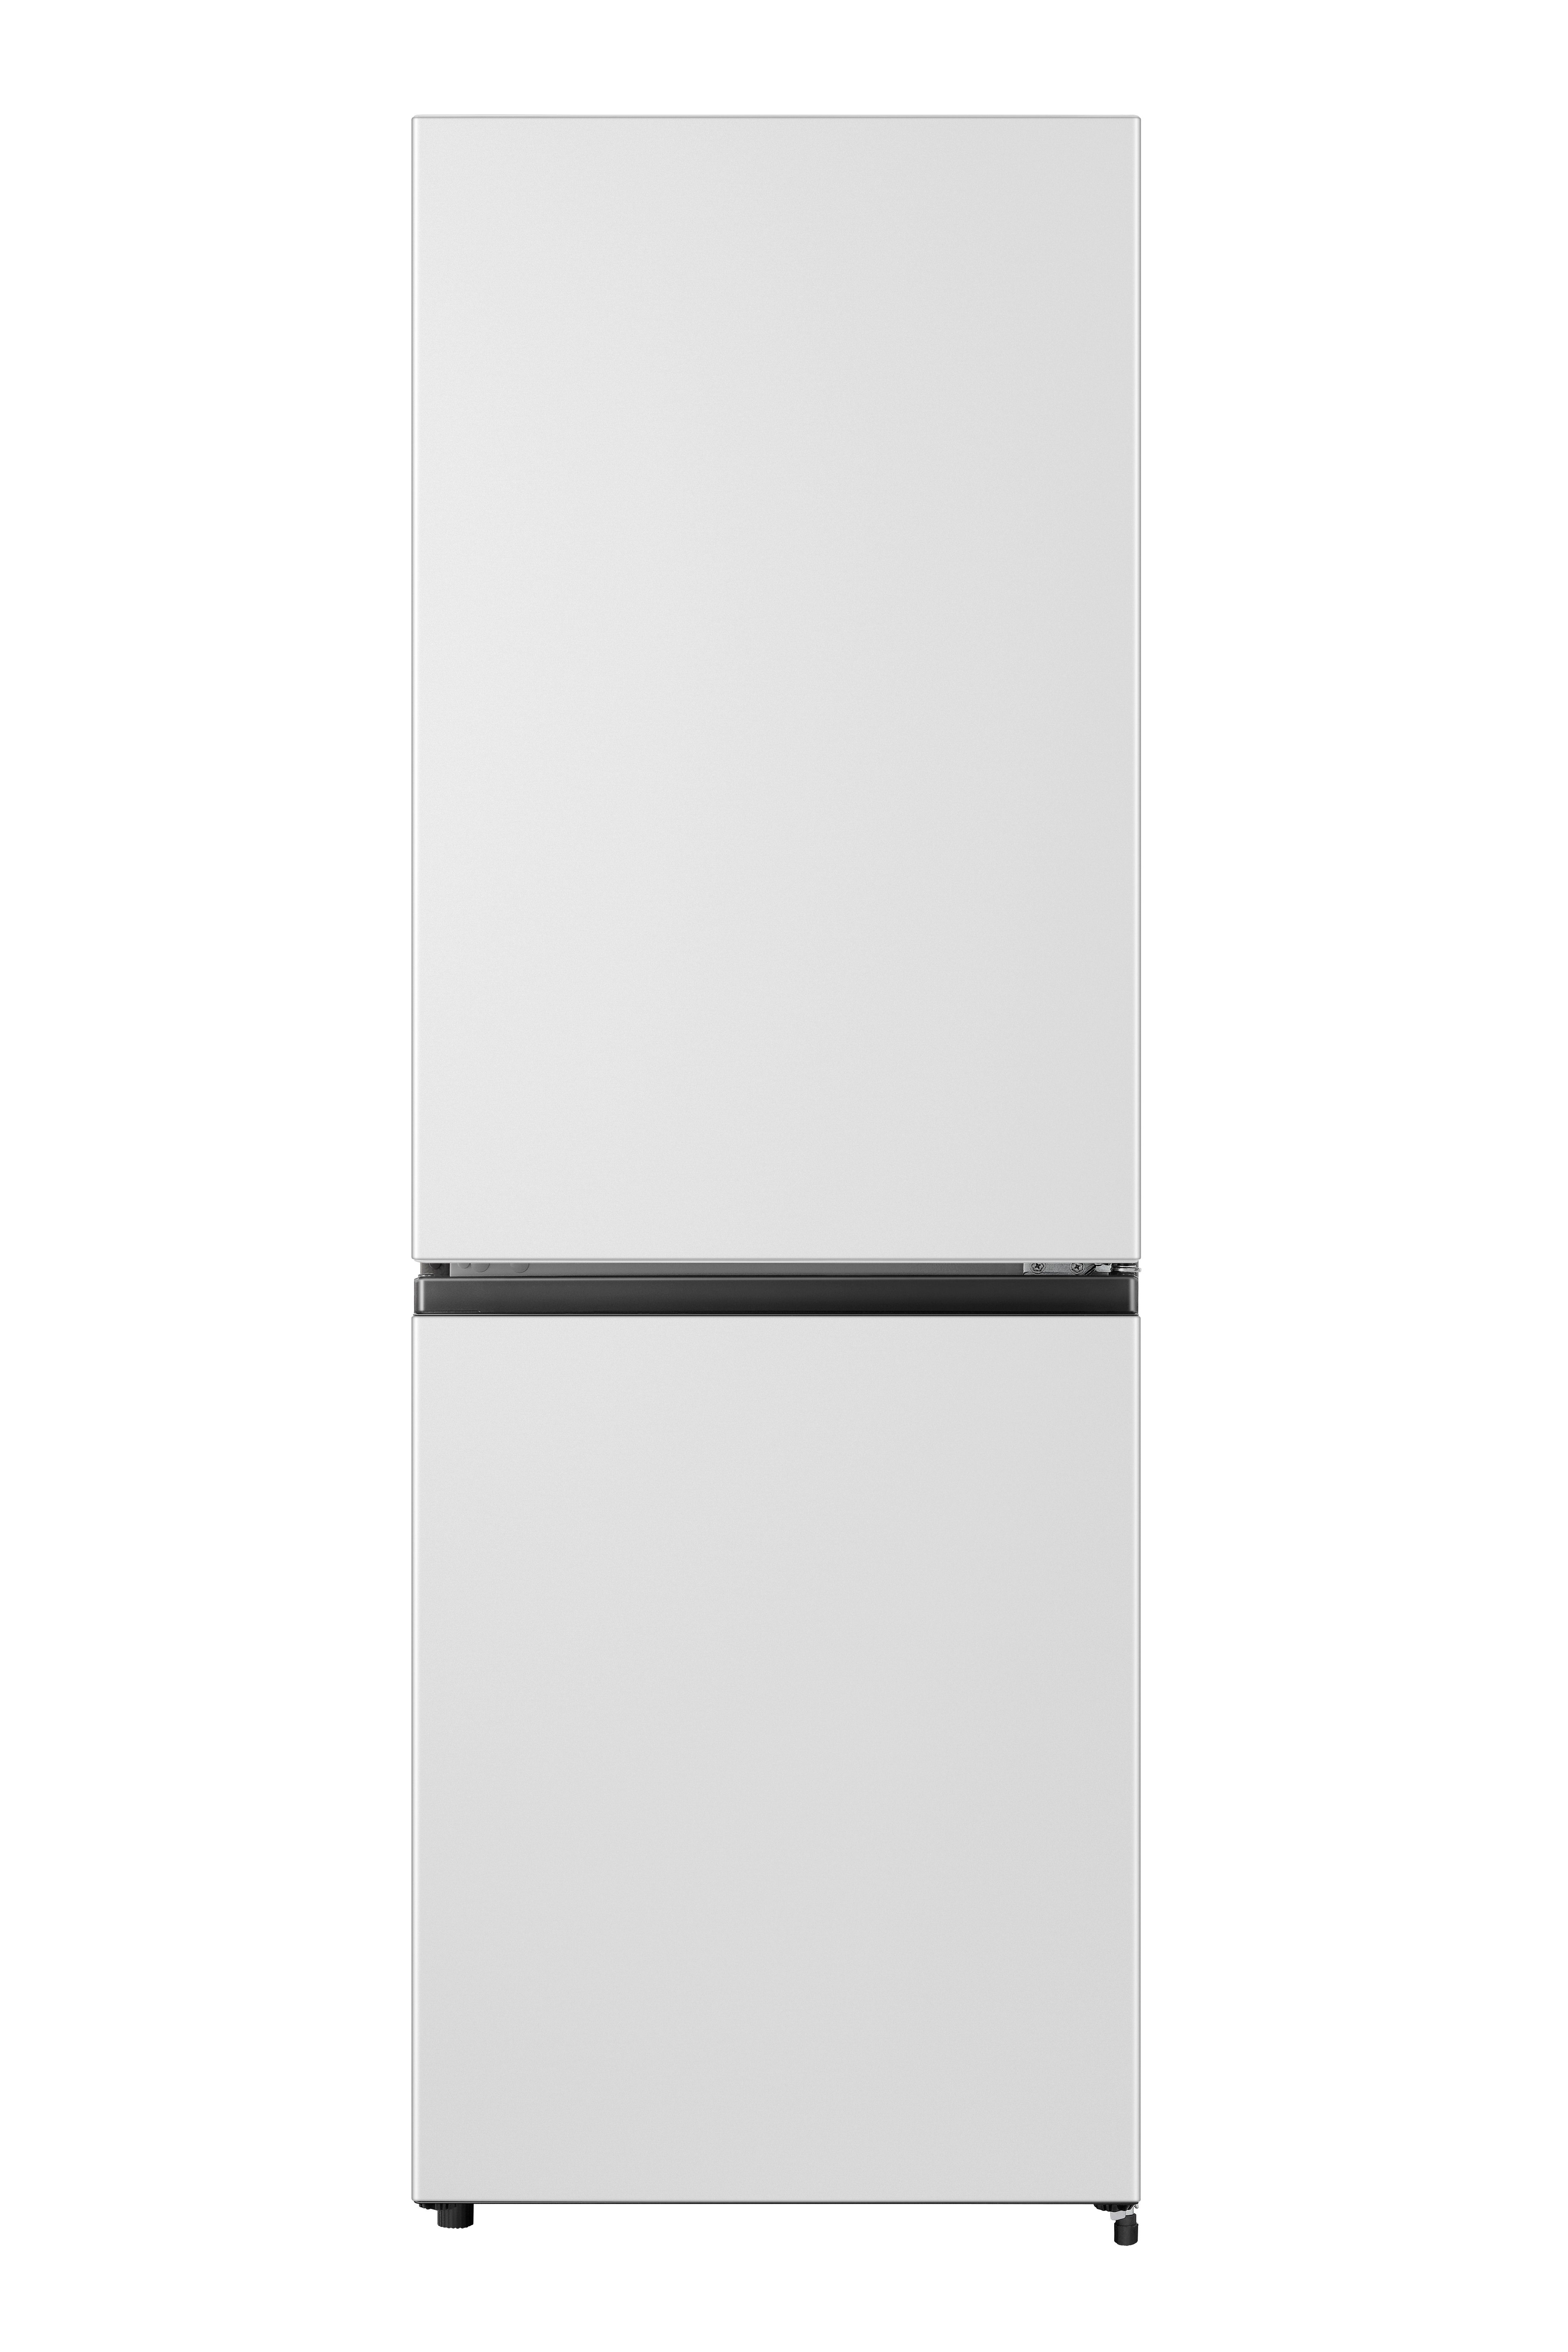 PKM Kühlschrank PKM KG225.4A+++W, 161,30 cm hoch